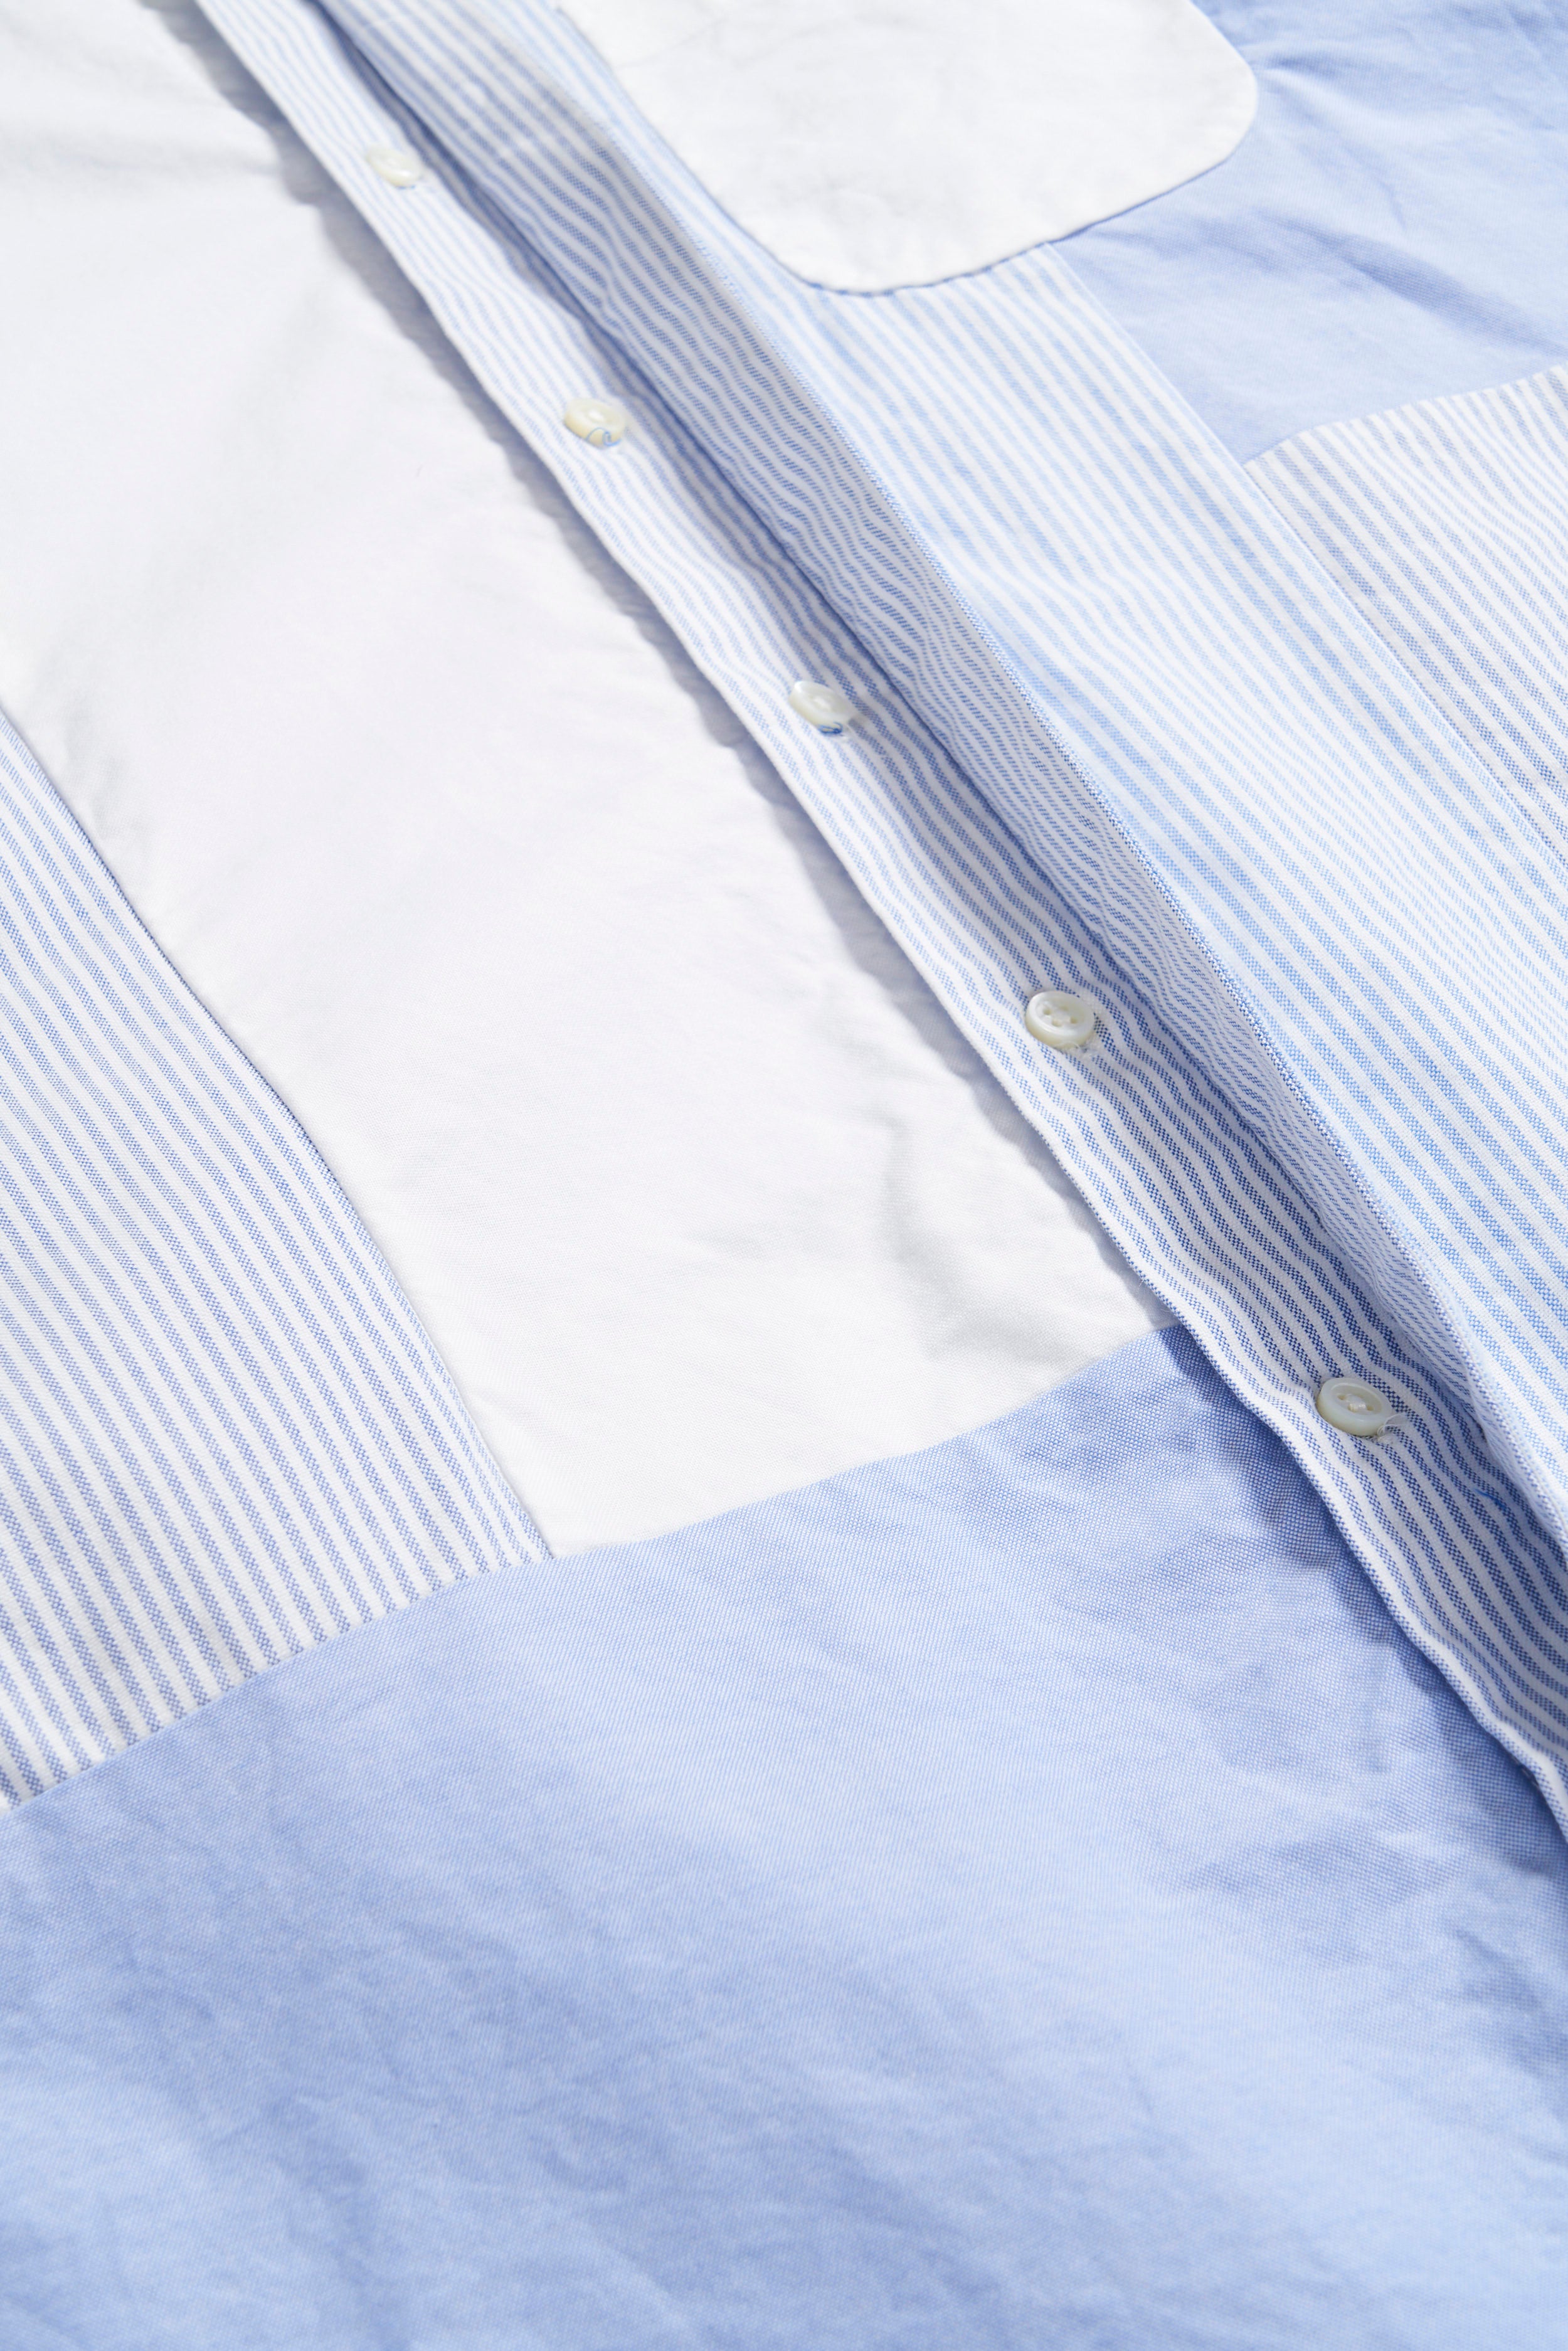 Engineered Garments Combo Short Collar Shirt - Blue/White Cotton Oxford